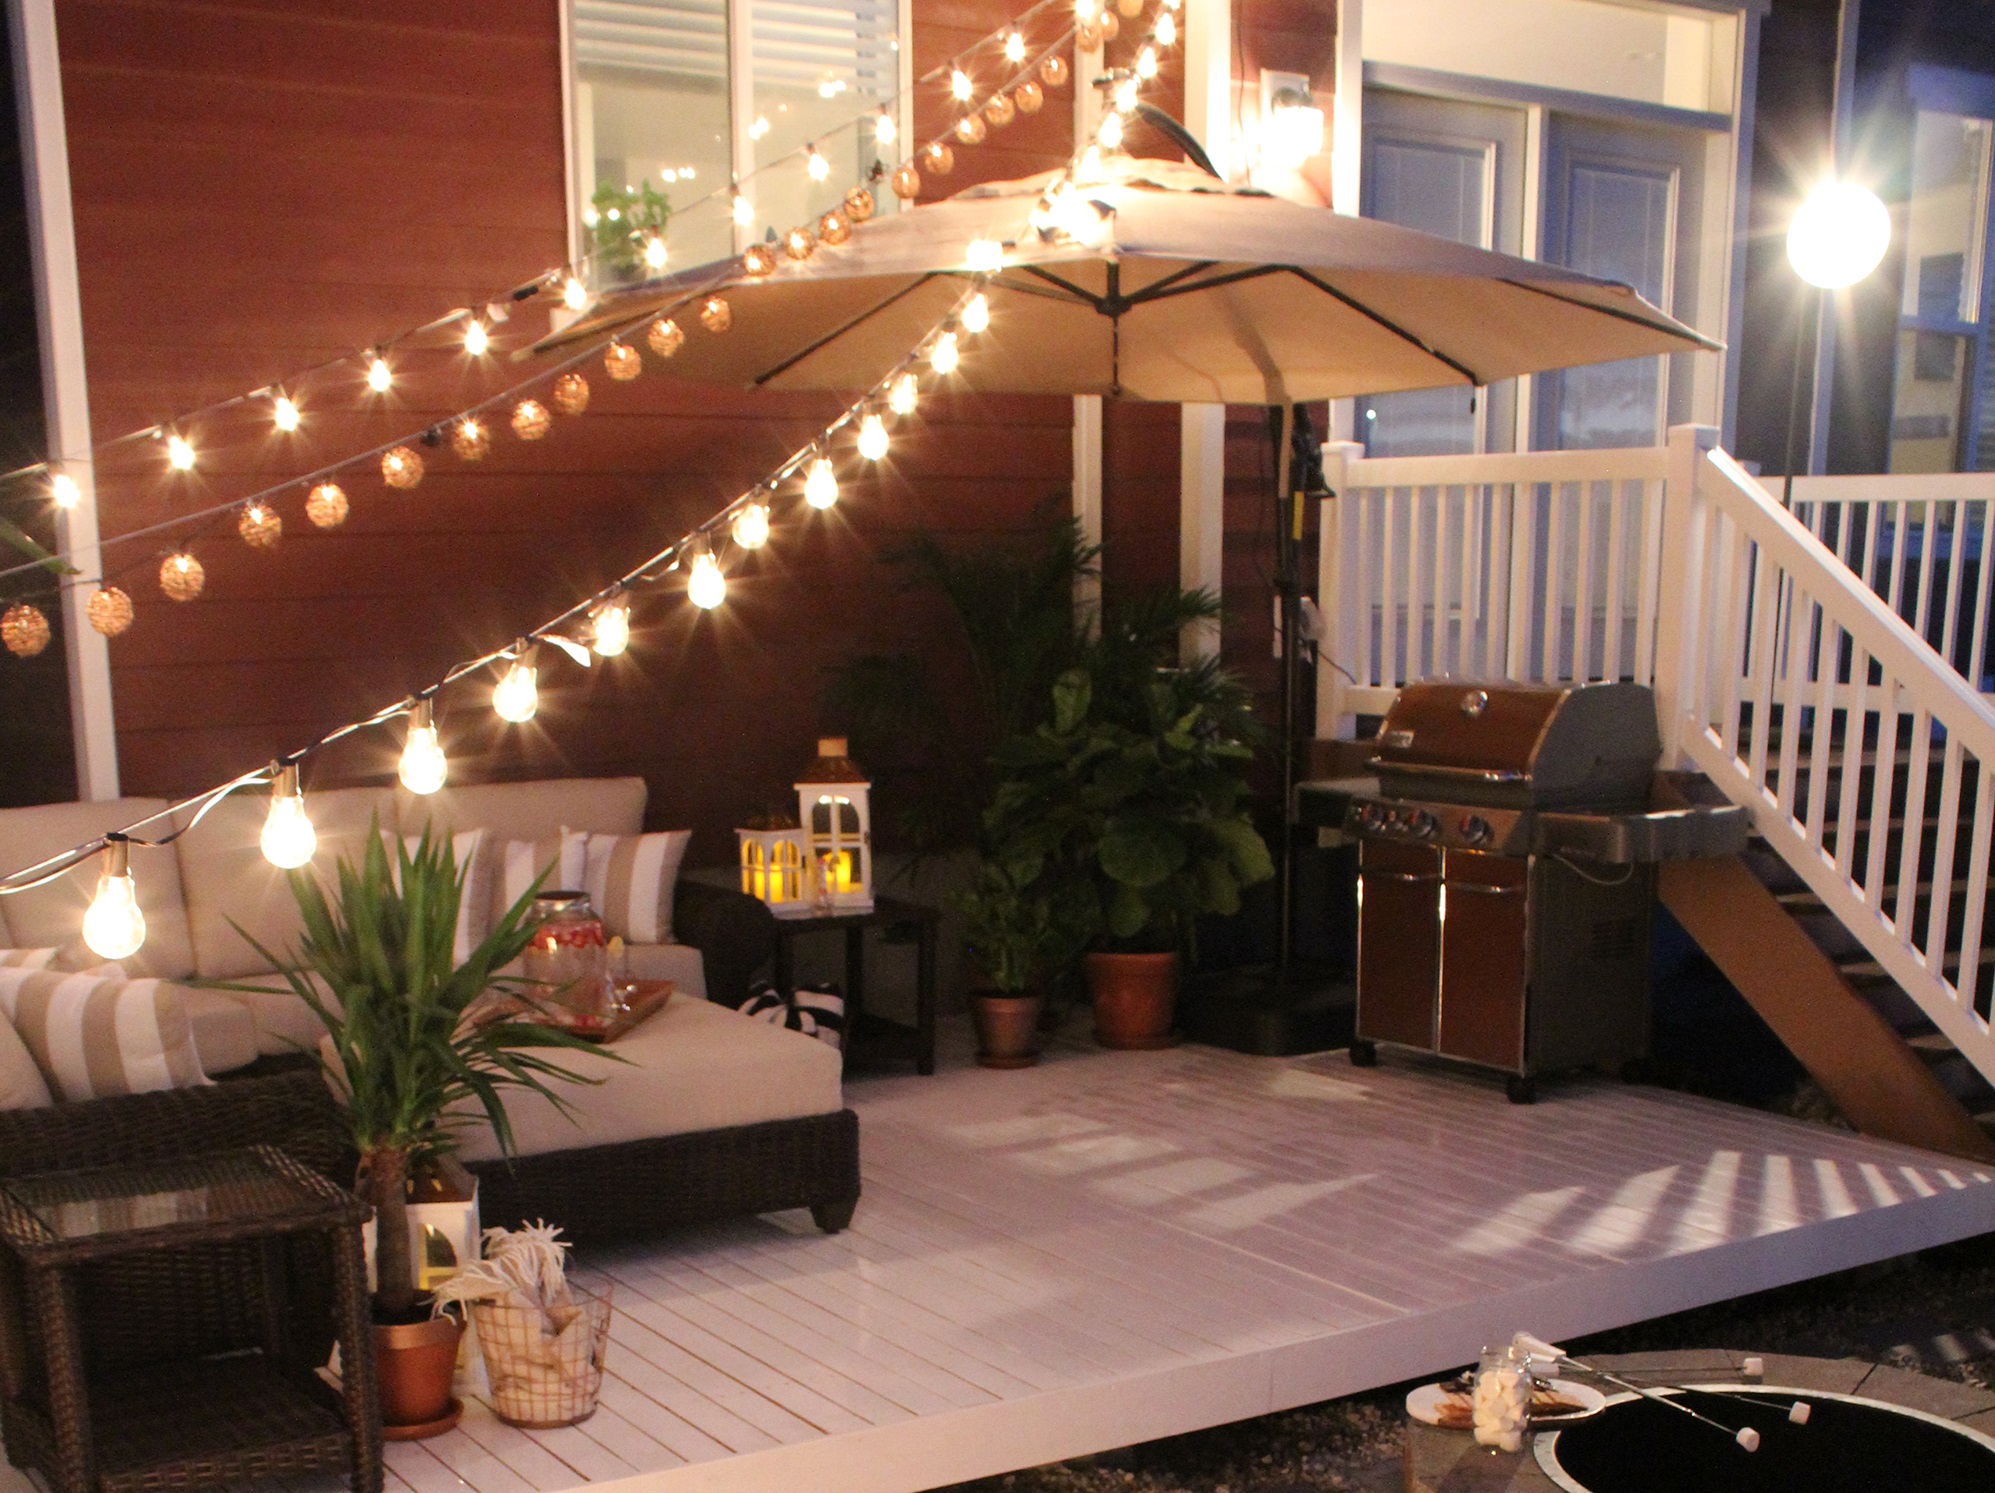 DIY deck with hanging lights